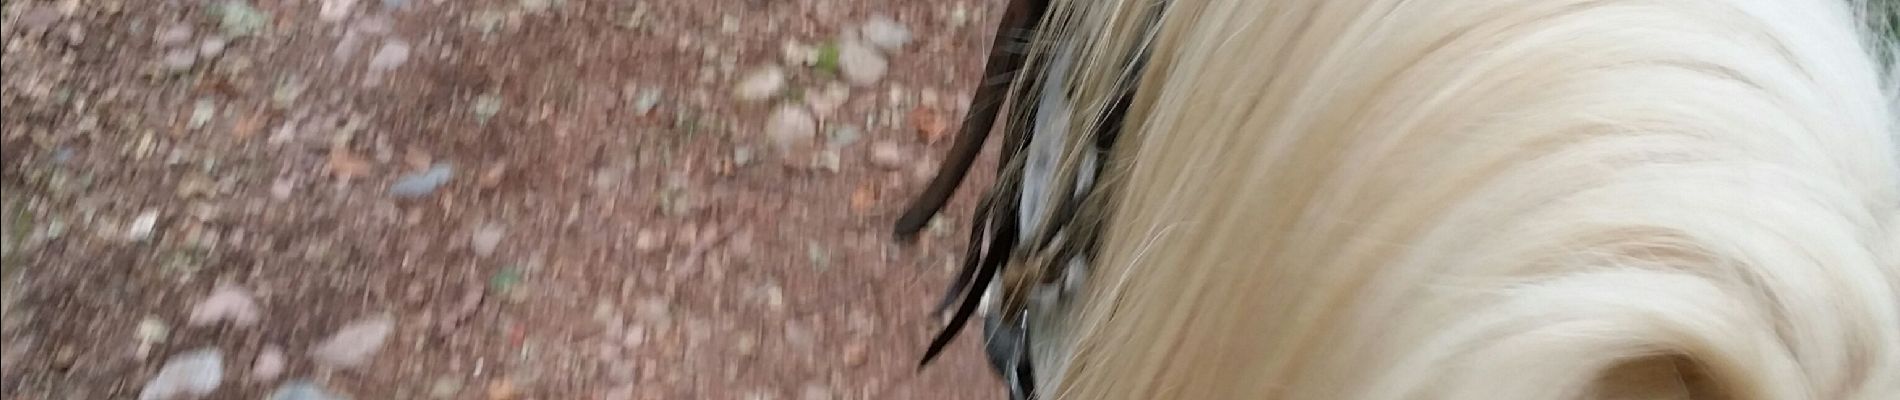 Trail Horseback riding Écromagny - maison  laititia  - Photo